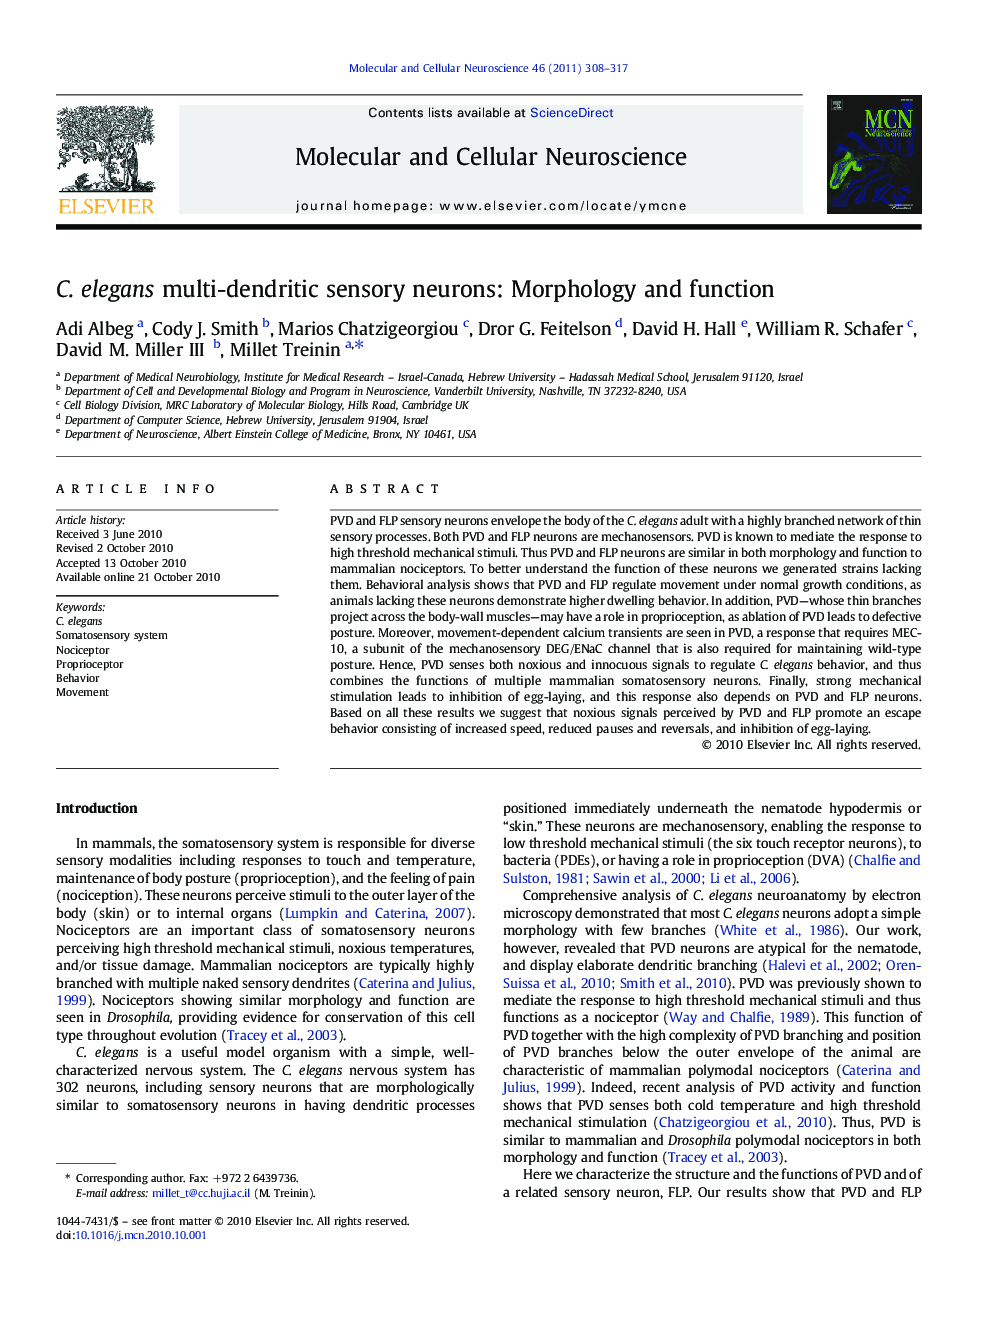 C. elegans multi-dendritic sensory neurons: Morphology and function